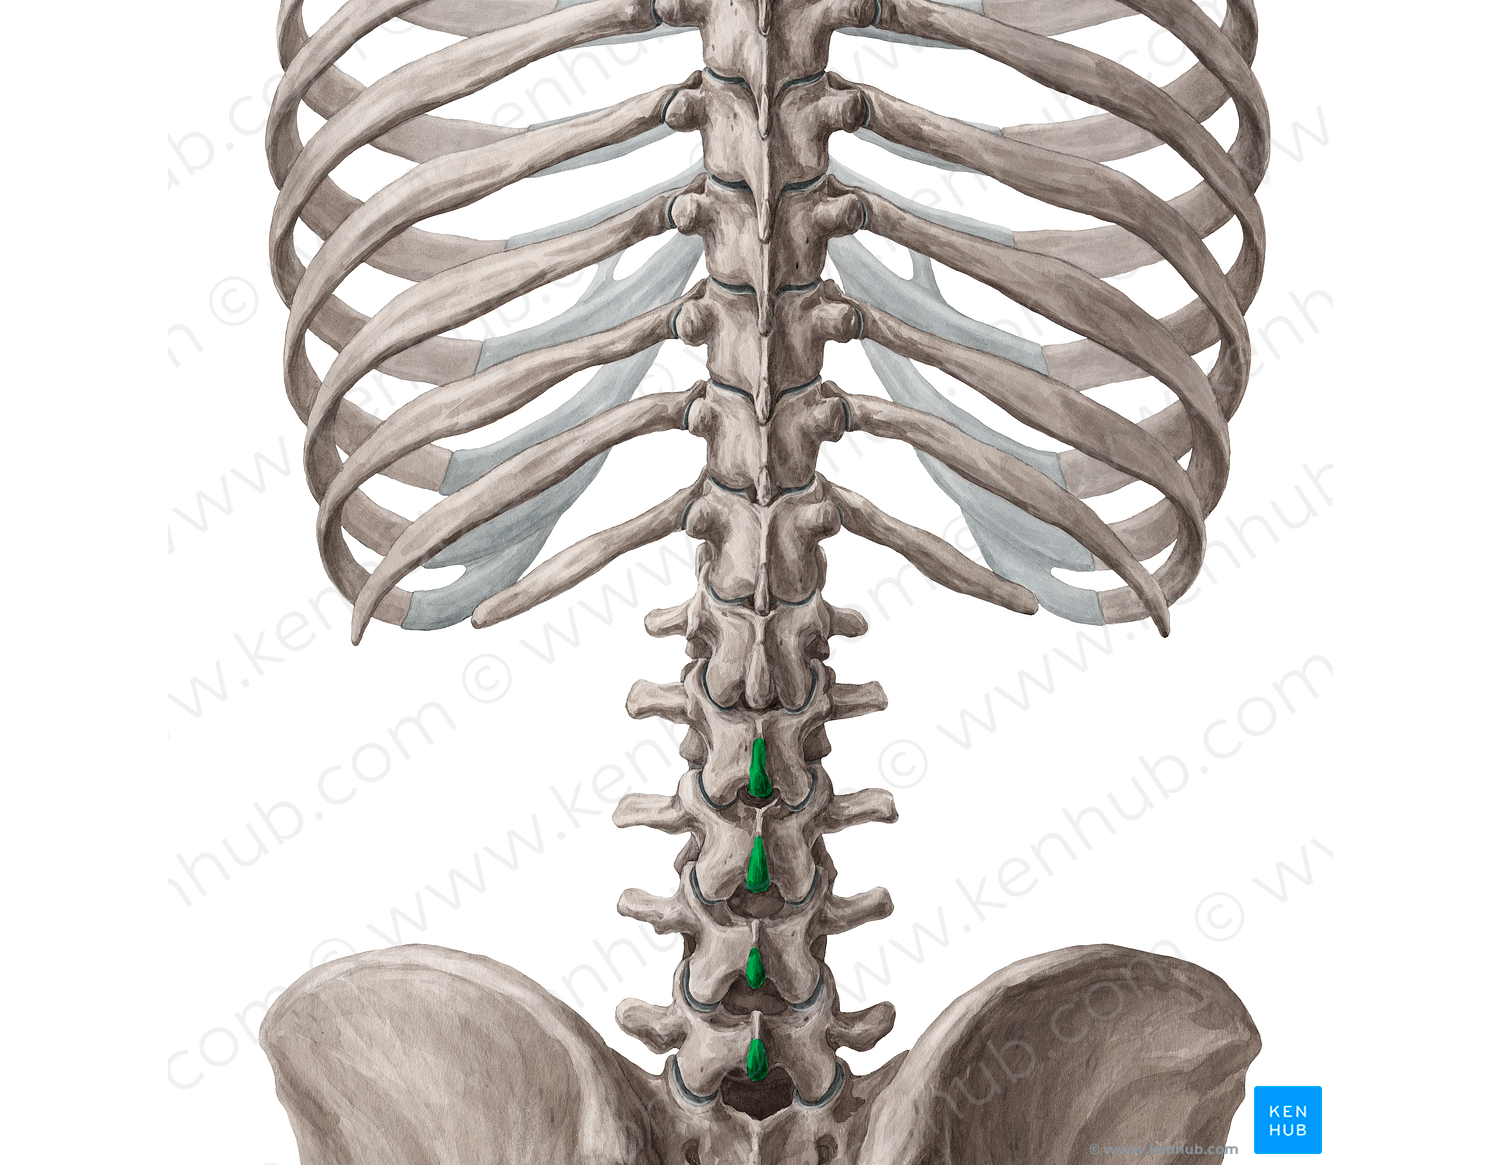 Spinous processes of vertebrae L2-L5 (#18540)